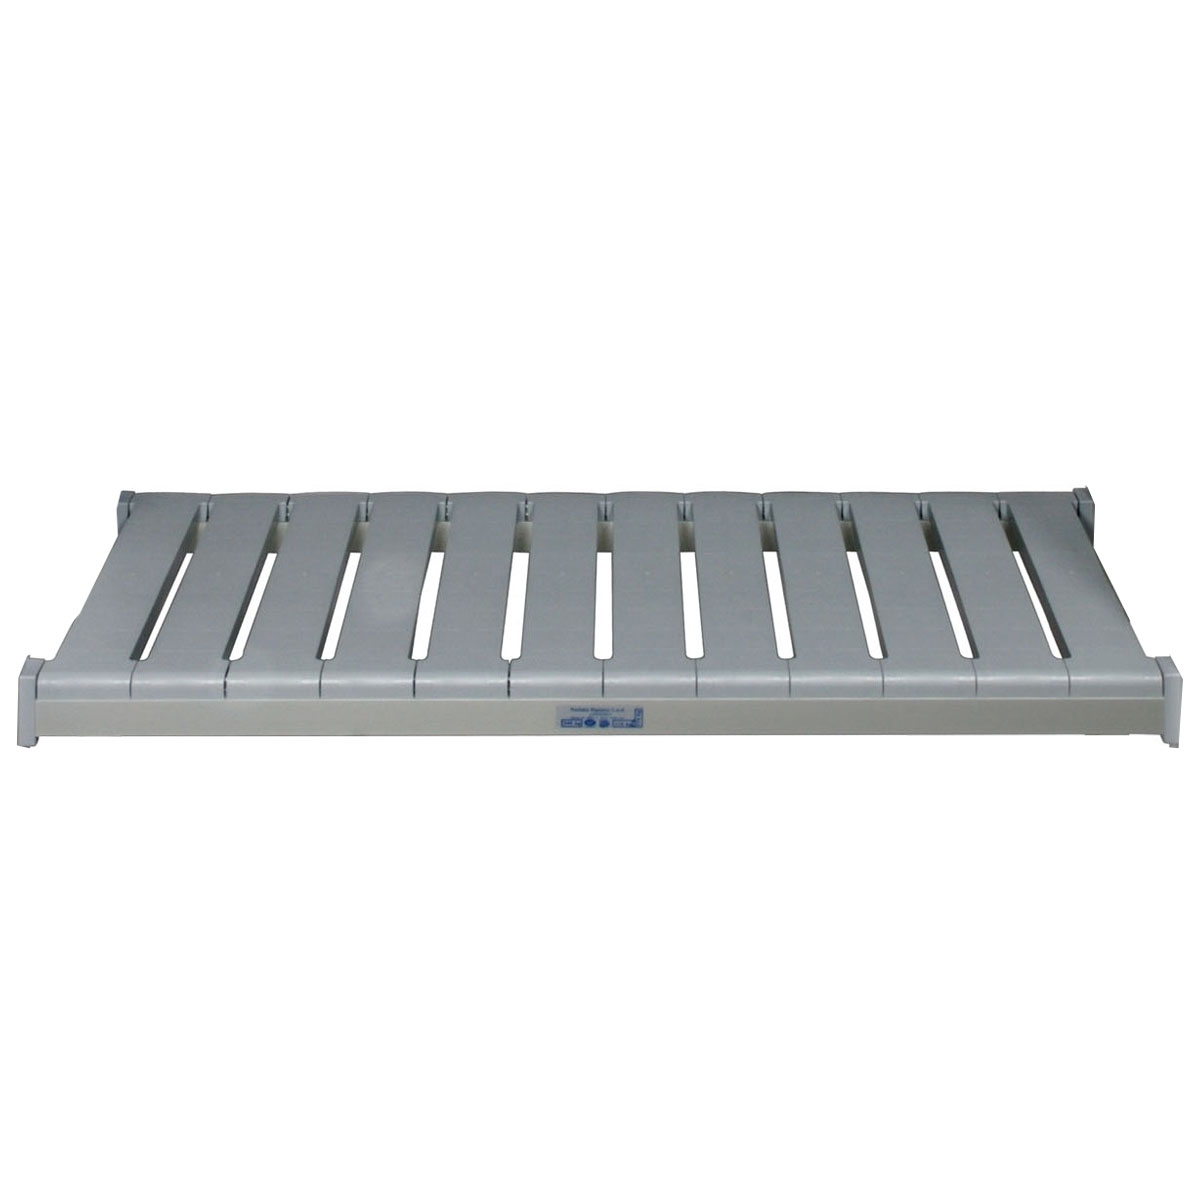 Eko Fit Polymer Range Additional Shelf - W770 x D600mm - KFS600